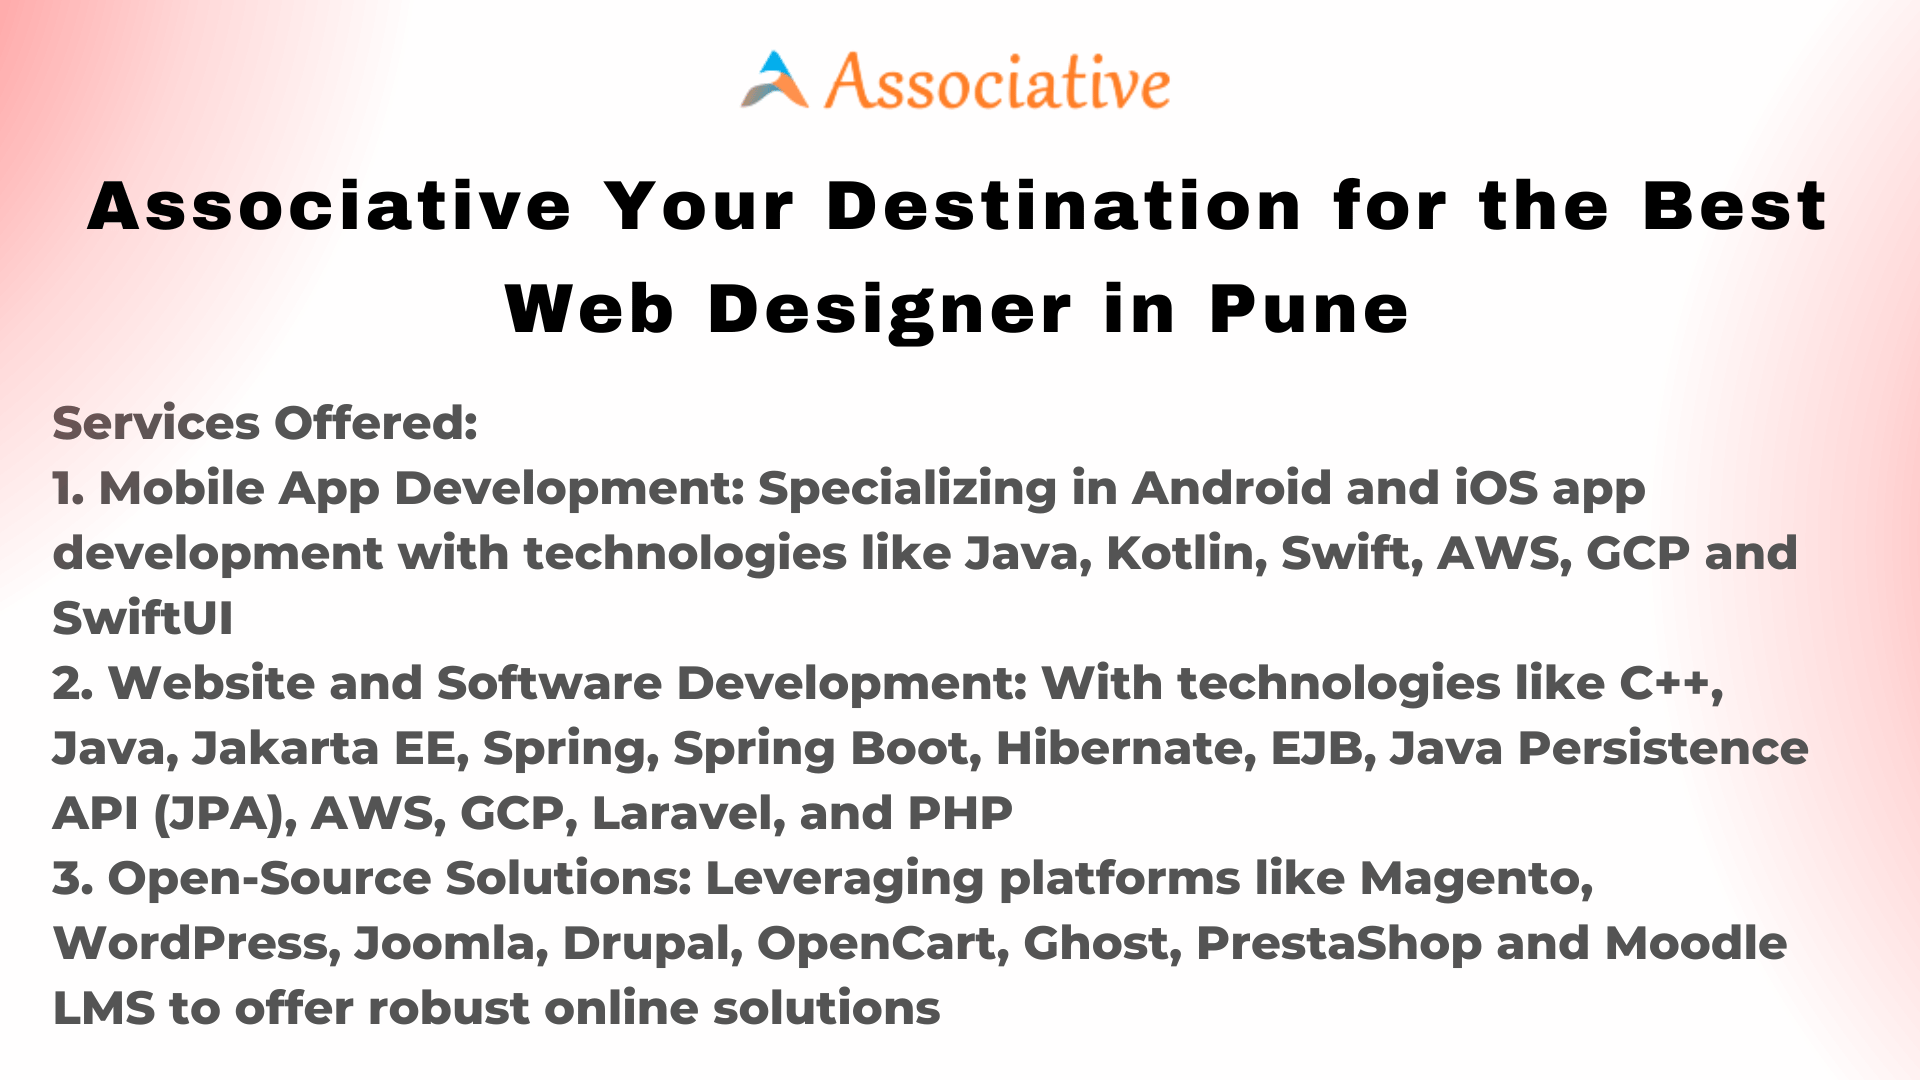 Associative Your Destination for the Best Web Designer in Pune